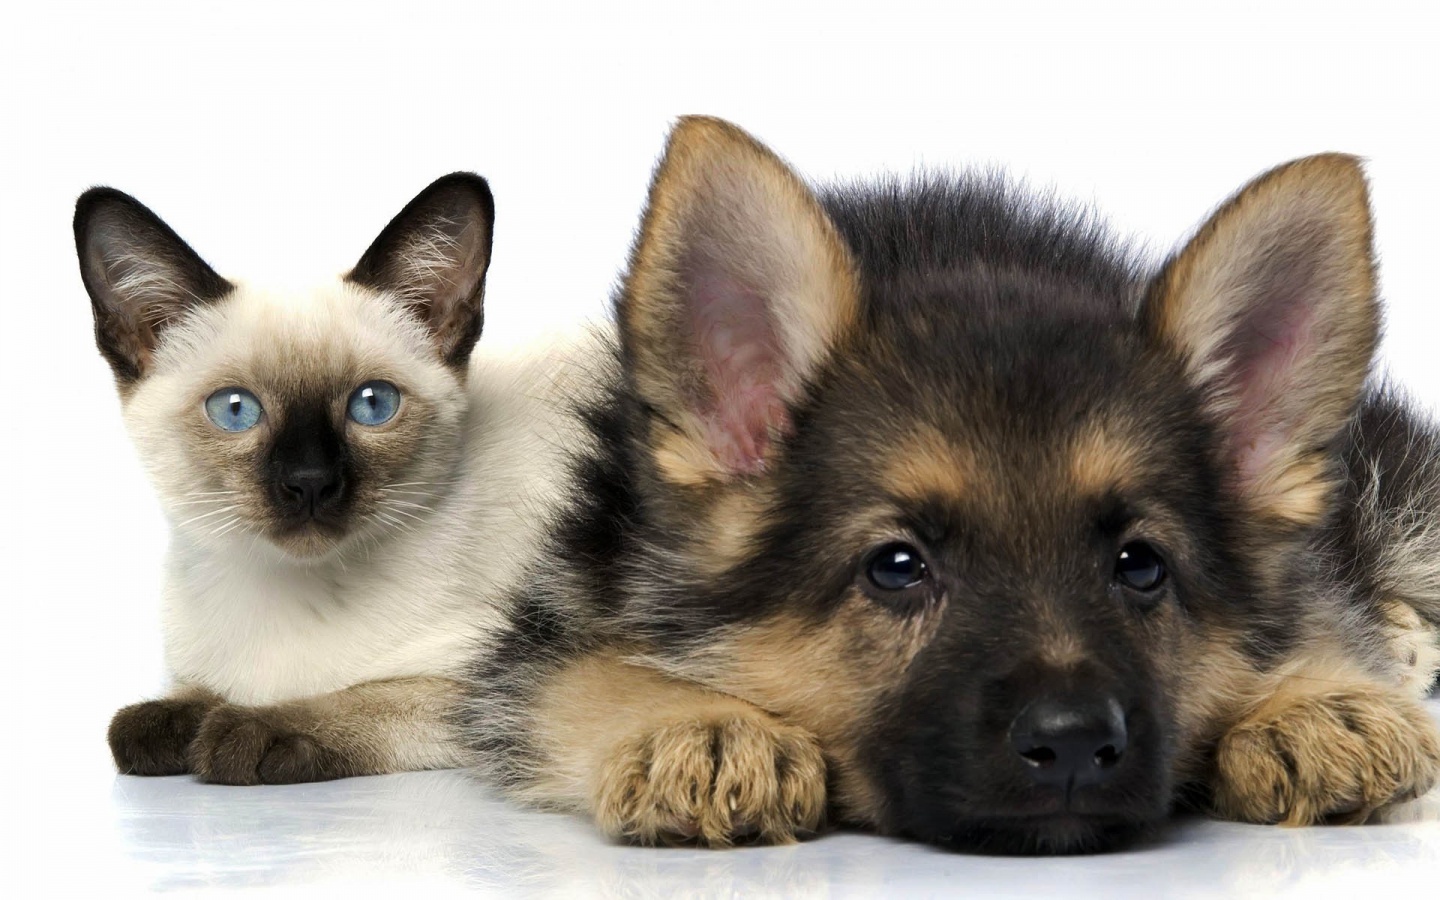 https://blogger.googleusercontent.com/img/b/R29vZ2xl/AVvXsEhFvRWHnZwrG8VTHWVswUt5VuisAJgFDwYAznPD_6KoWJwyqbDT4Gxlr58TwPIvCHJMUOOaUpRyqJrd8fZDPaXYm2BLPm3ni382t8cJKXVFBFslaI5LIbSCB5IR0HZtgVaitplrcyf0uuxu/s1600/Cats+and+Dogs+images.jpg